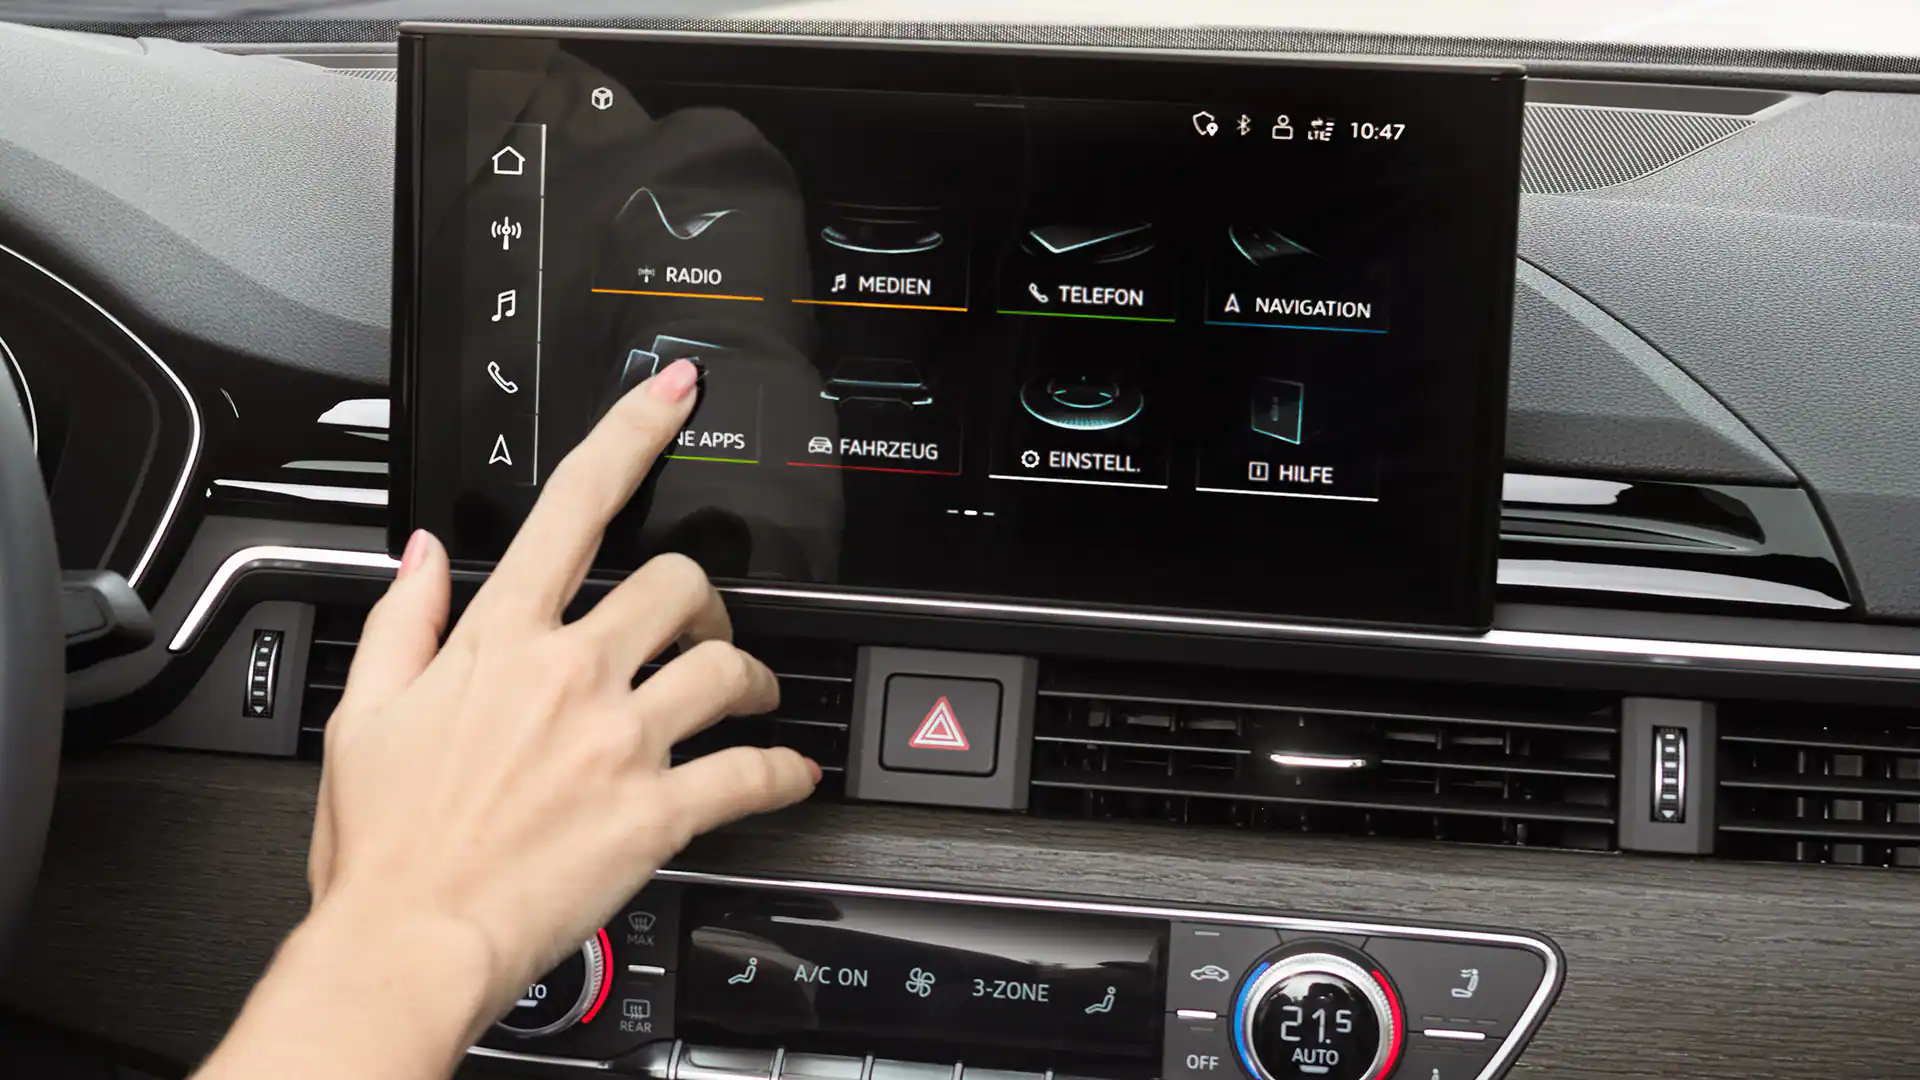 Audi A5 Coupe MMI Infotainment screen